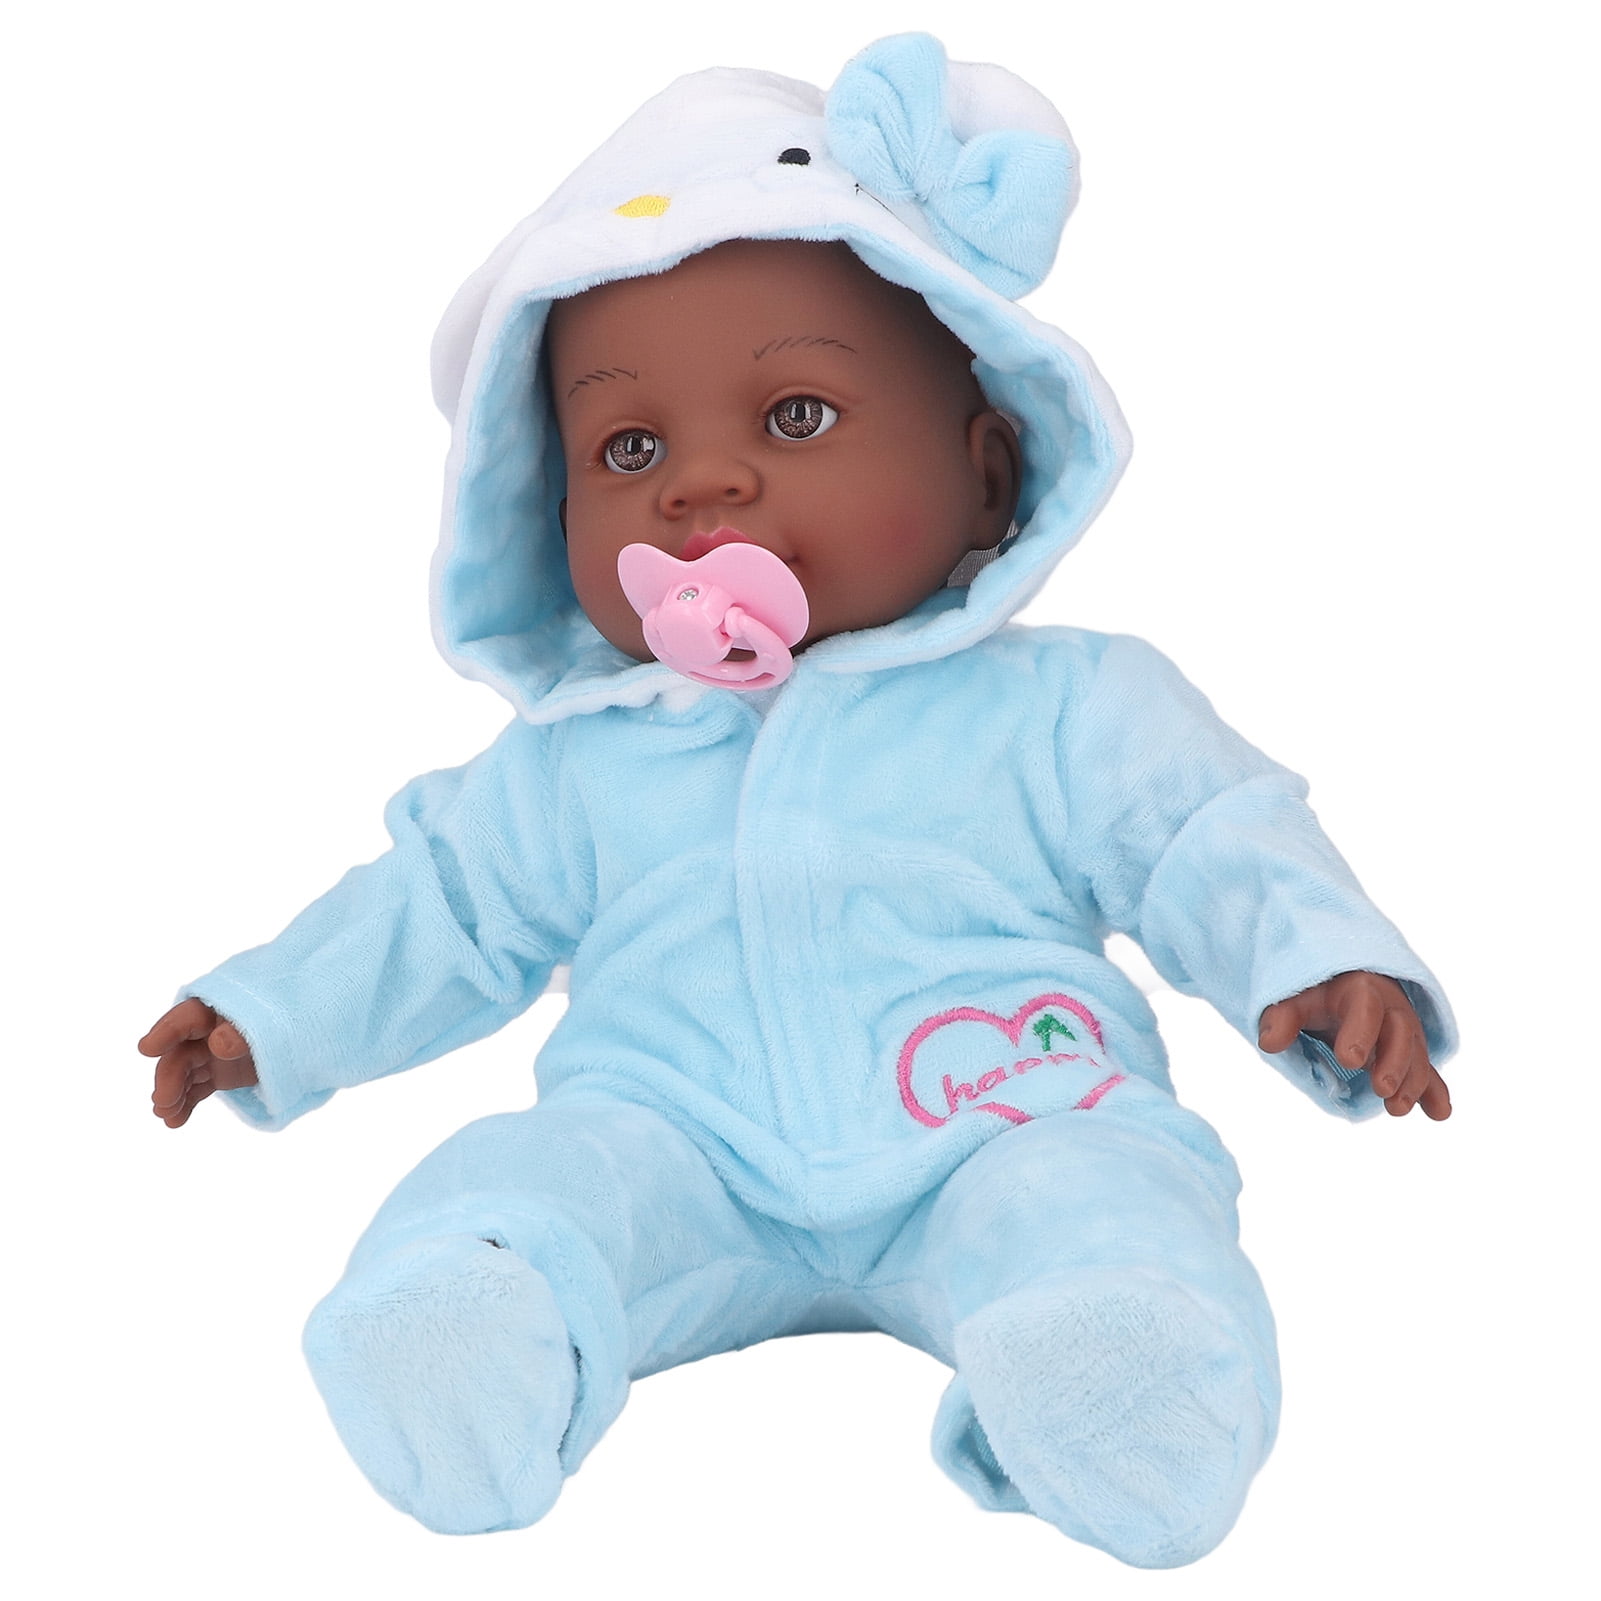 1set Reborn Dolls Pajamas Dress Simulation Baby Reborn Dress Up